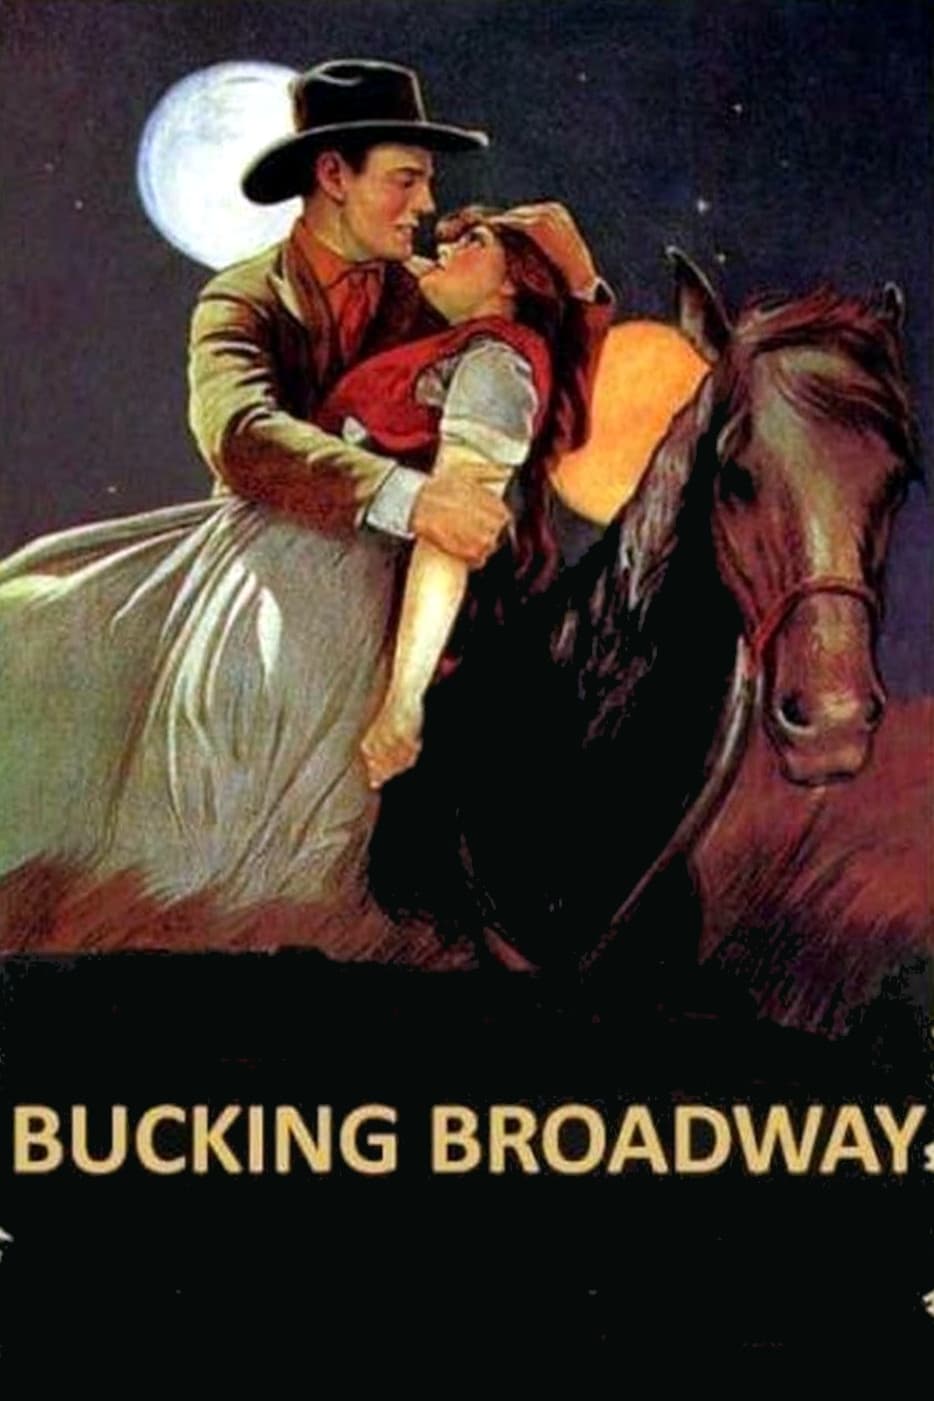 Bucking Broadway